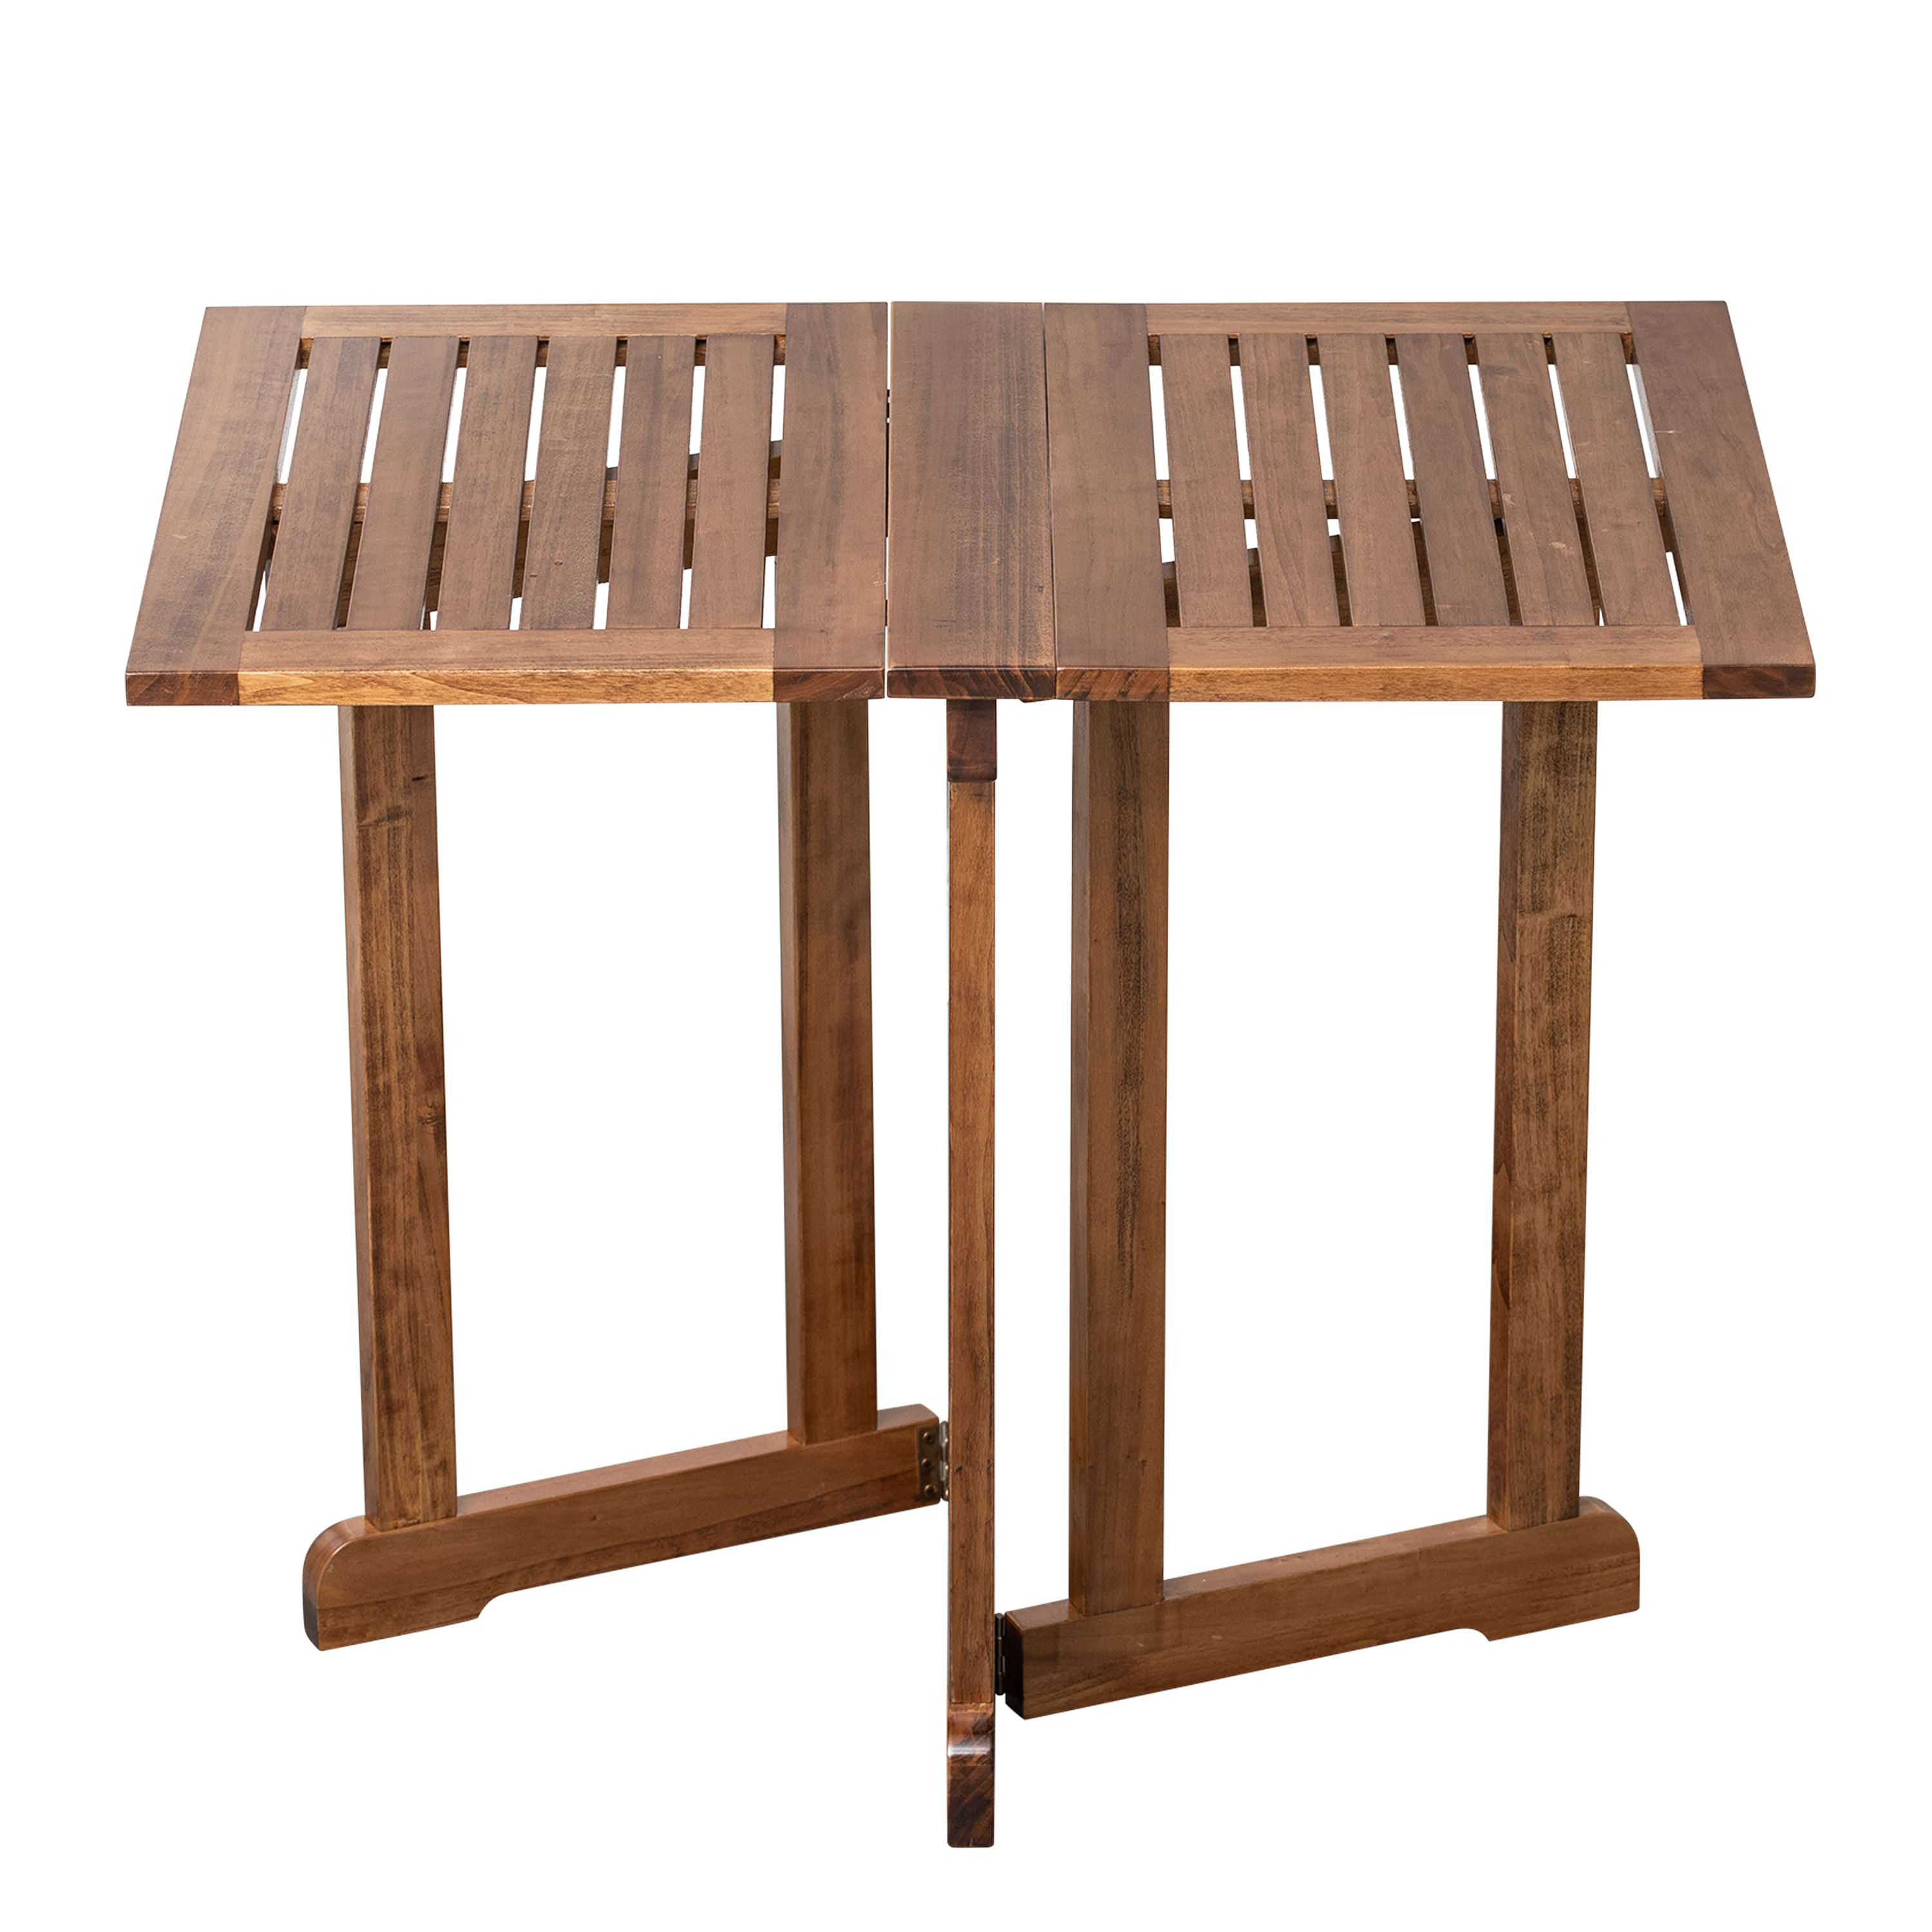 Mesas plegables madera.